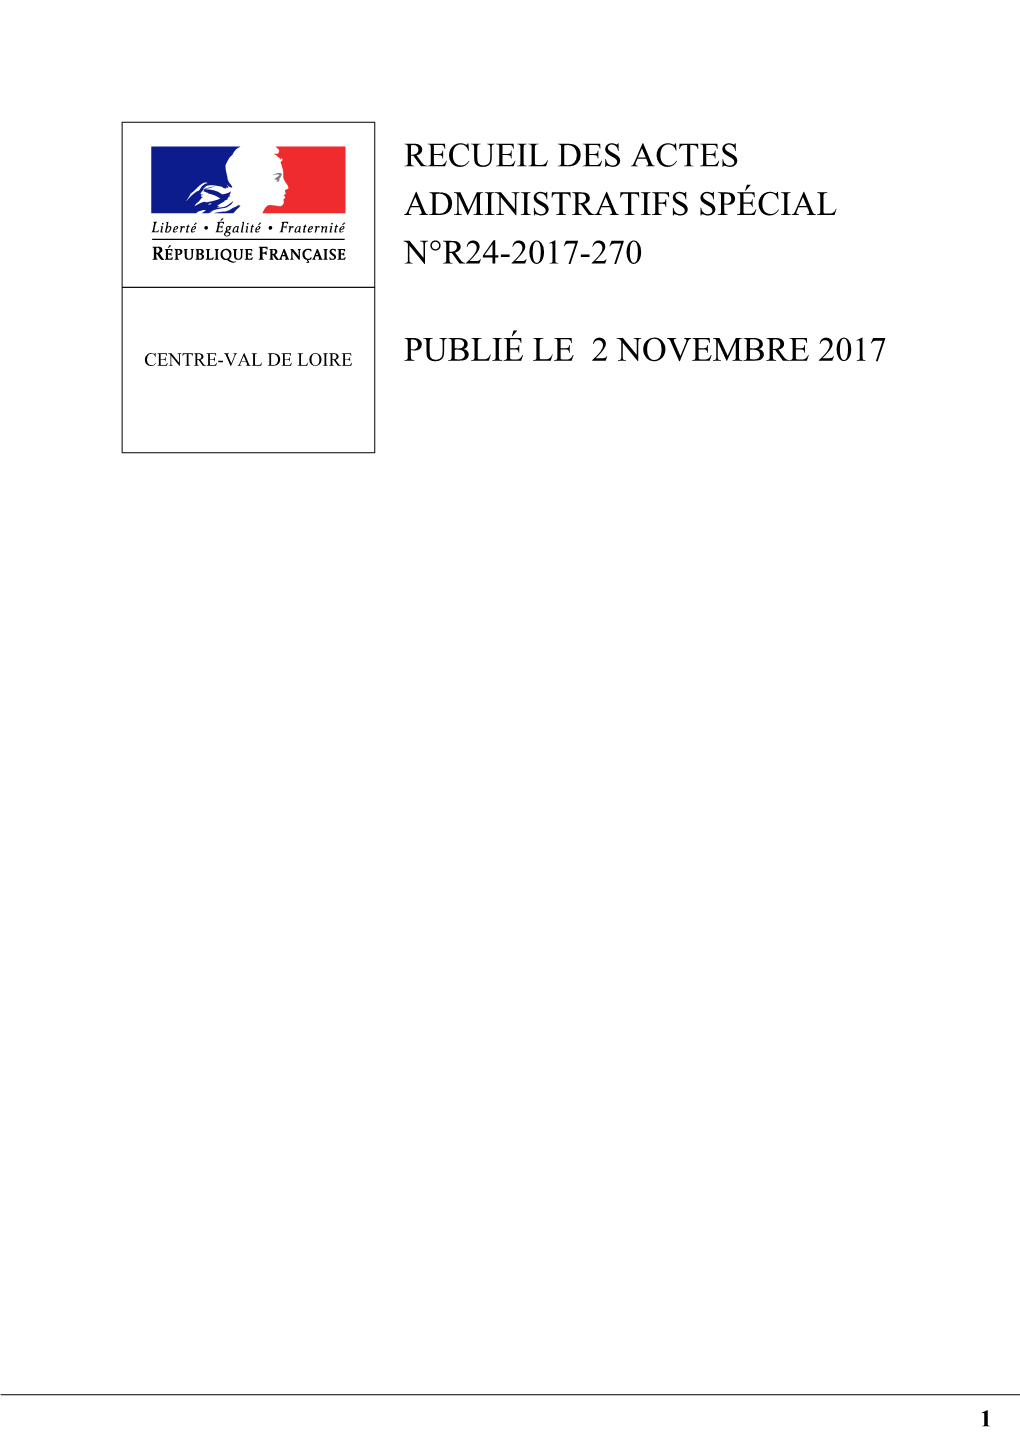 Recueil-R24-2017-270 Du 2 Novembre 2017